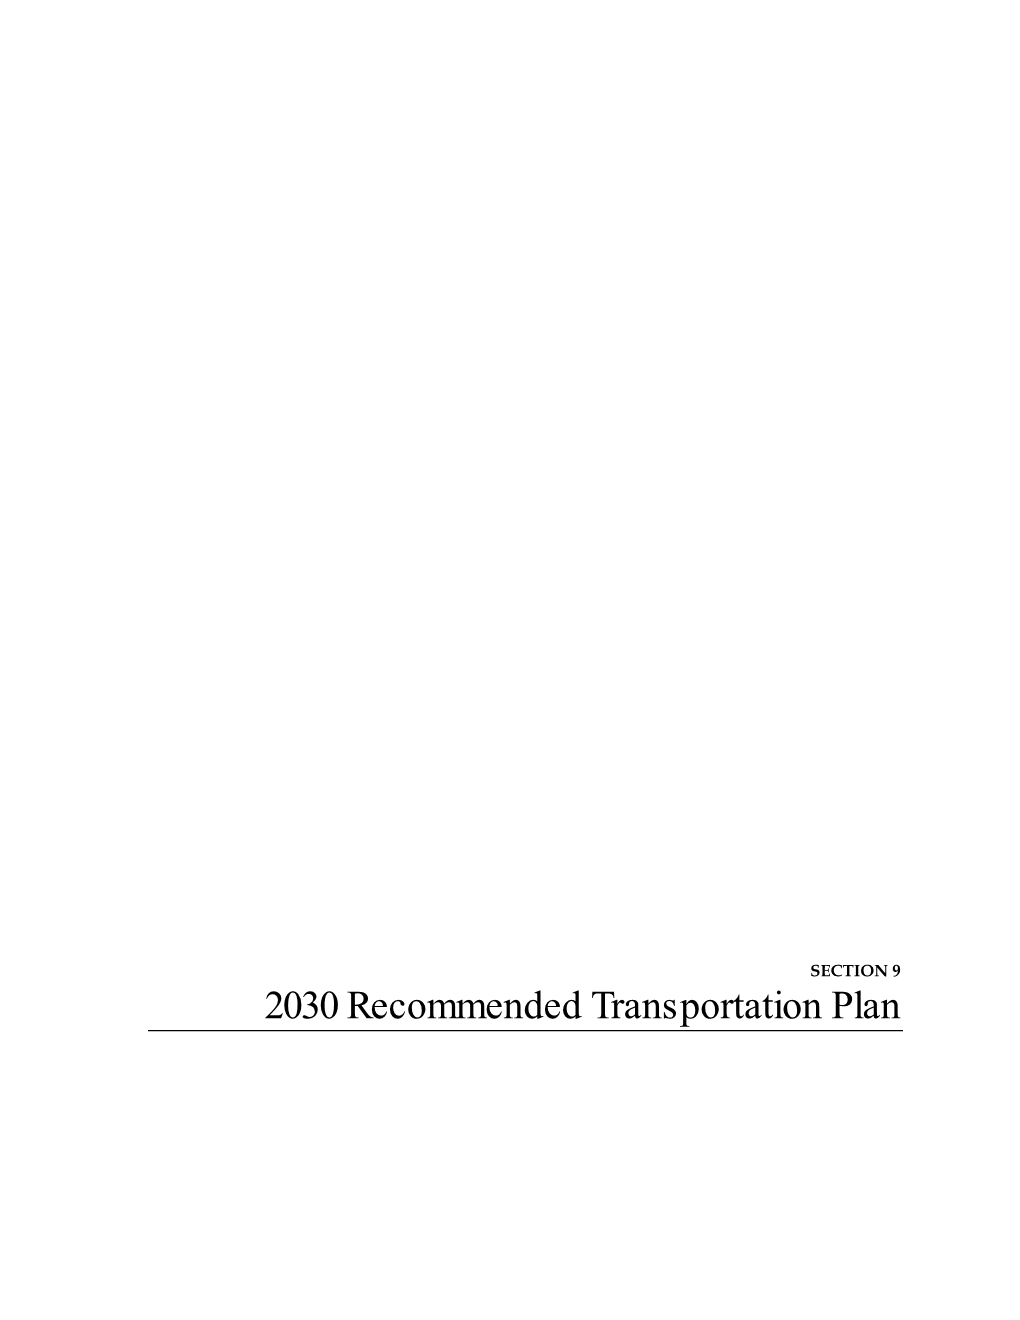 2030 Recommended Transportation Plan